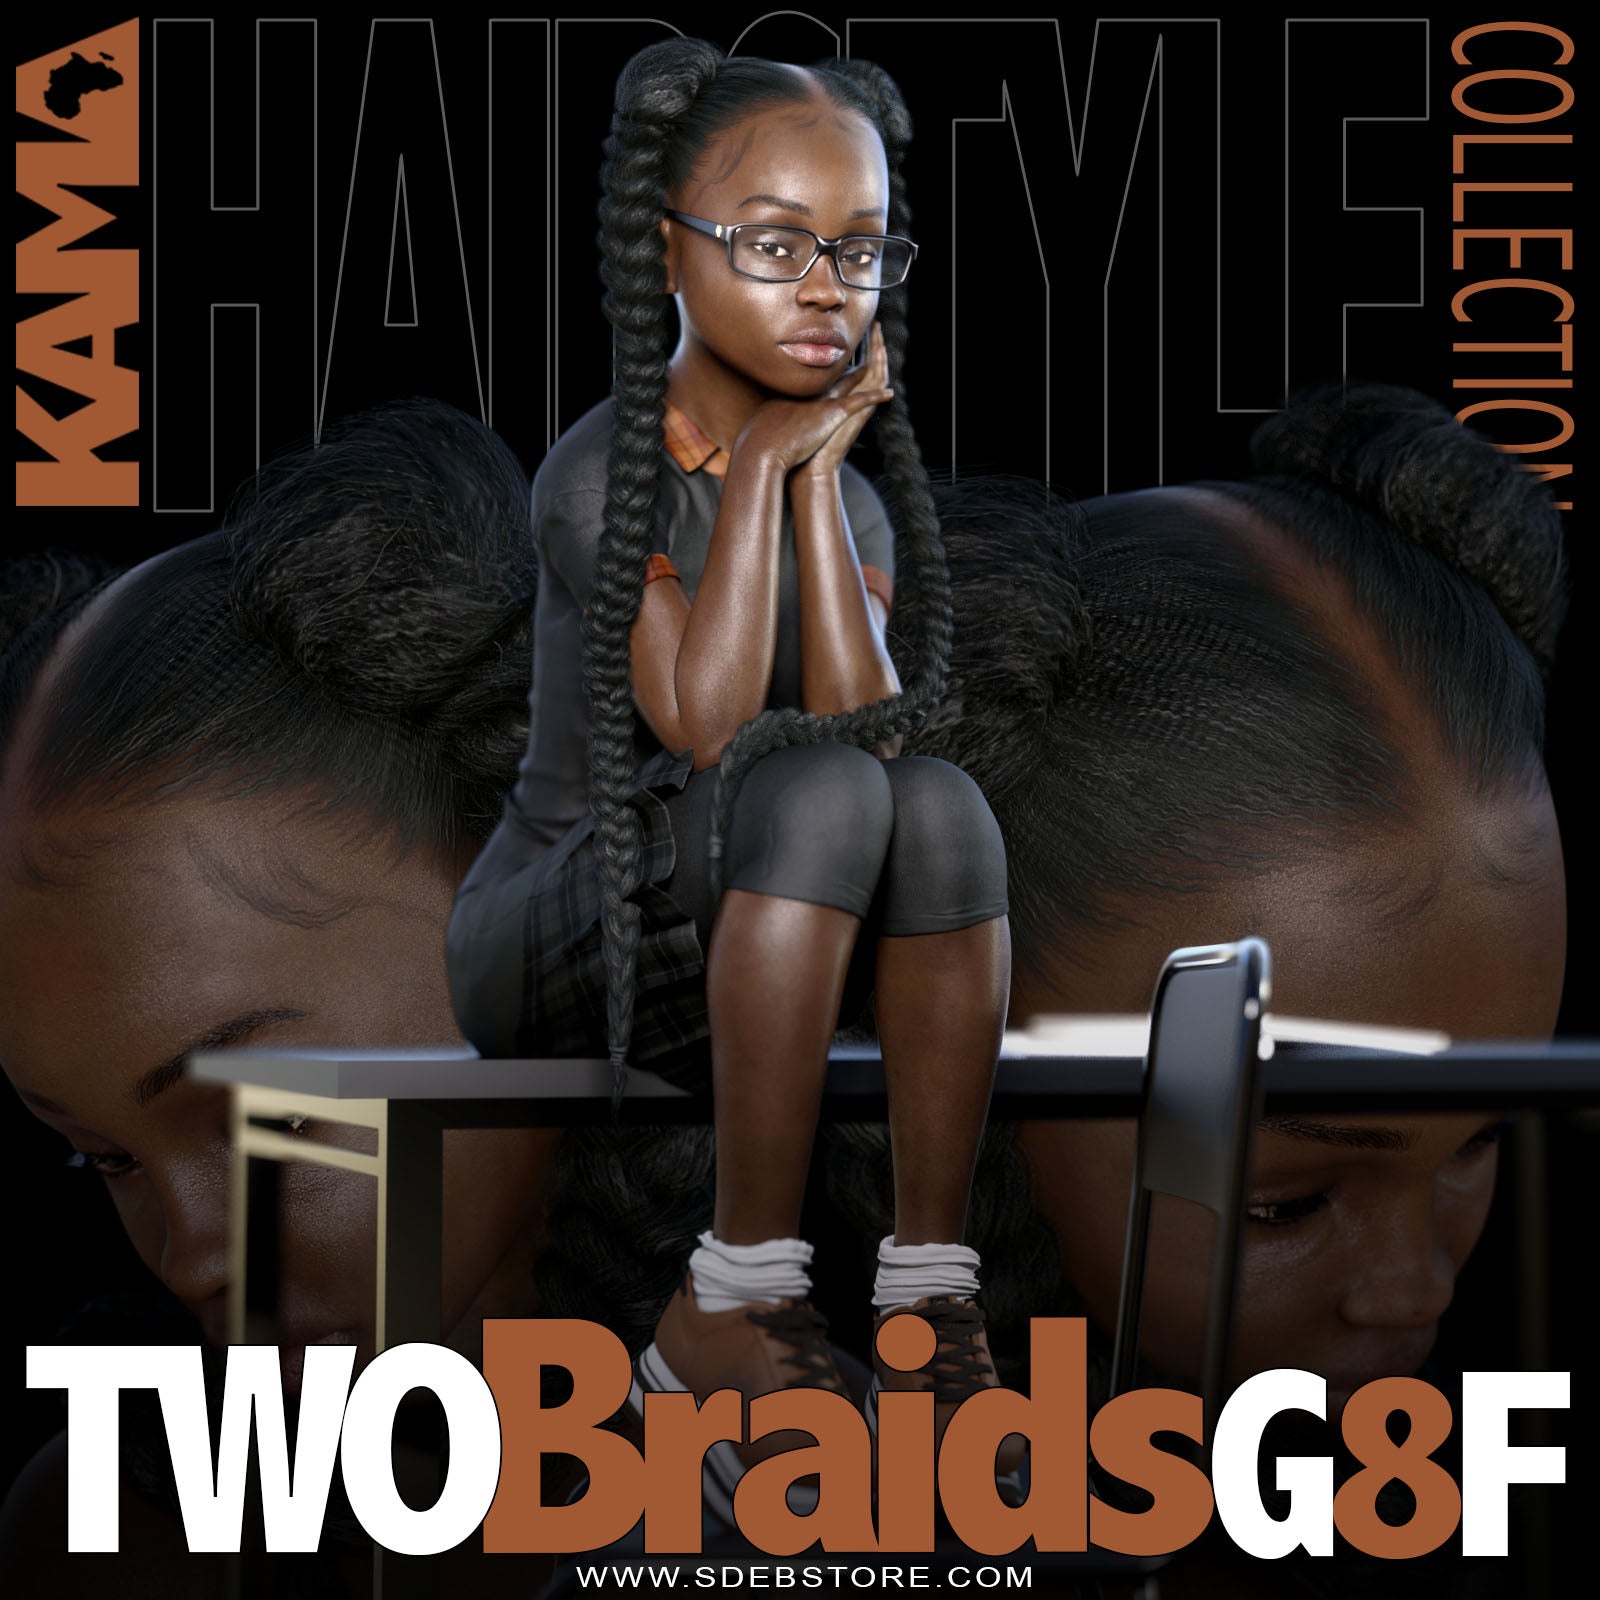 Two Braids G8F - www.SdeBStore.com